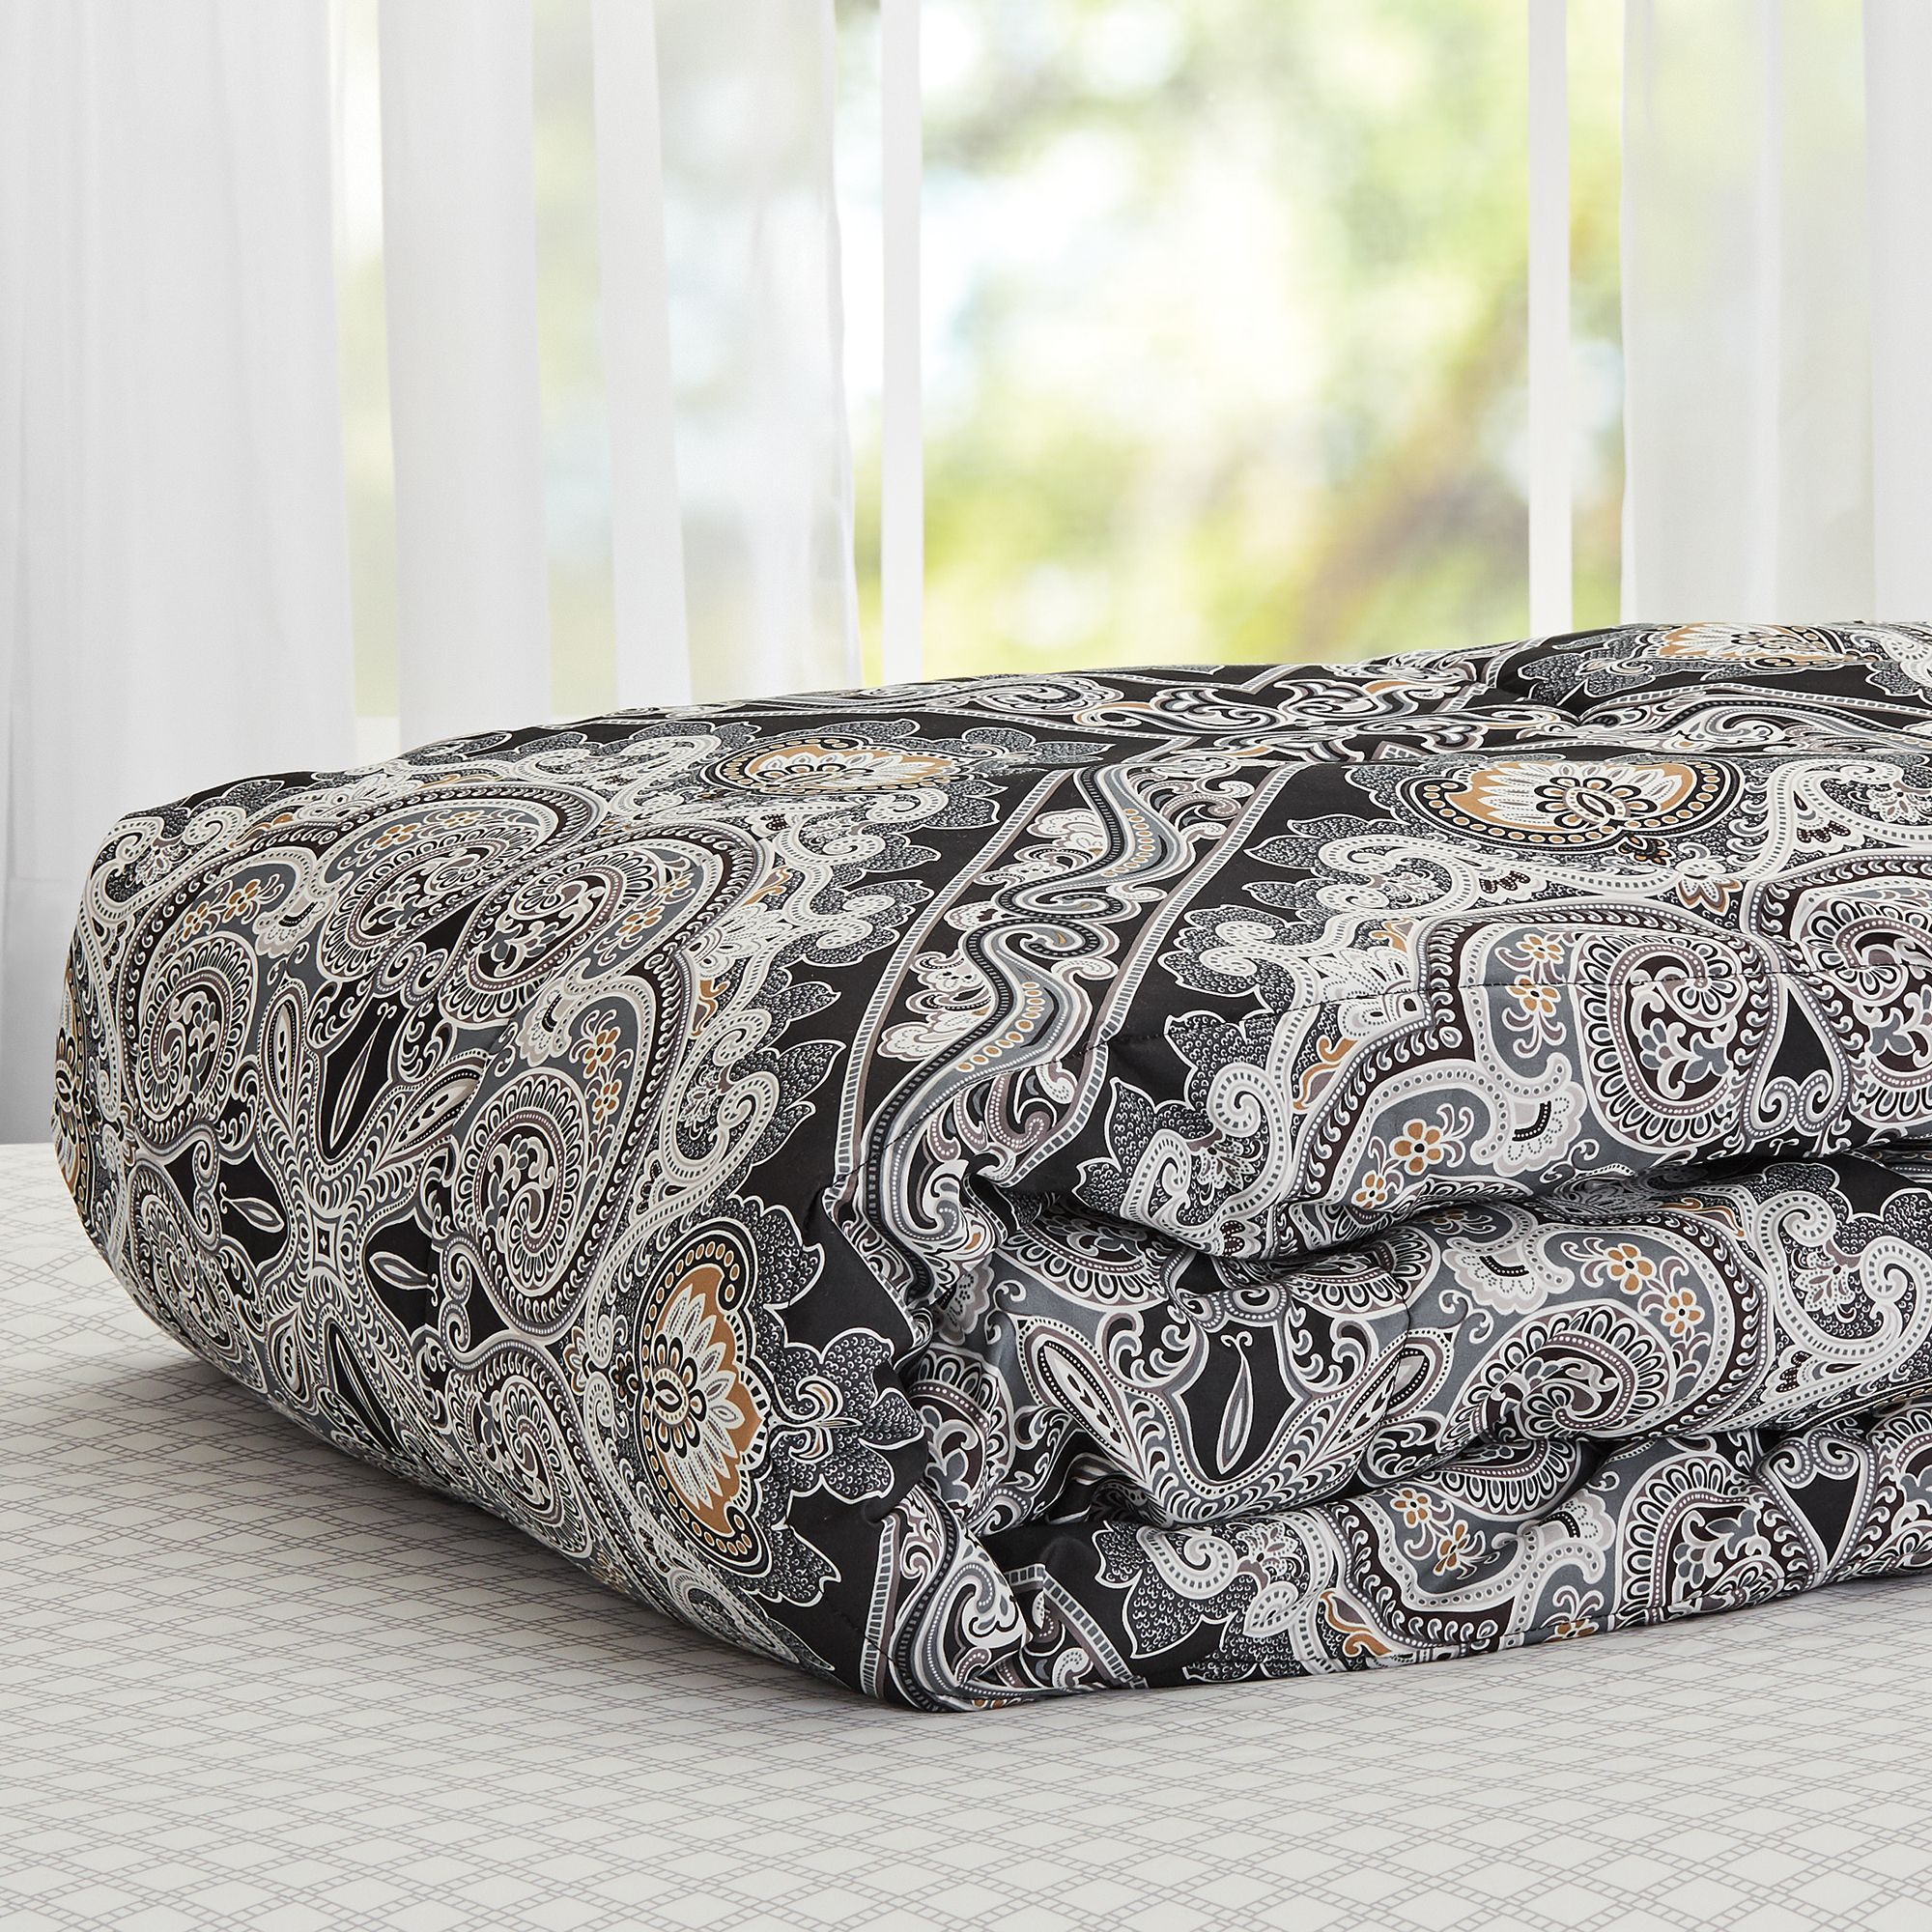 Mainstays Black Diamond Complete Comforter Bedding, Twin/Twin XL - image 4 of 7